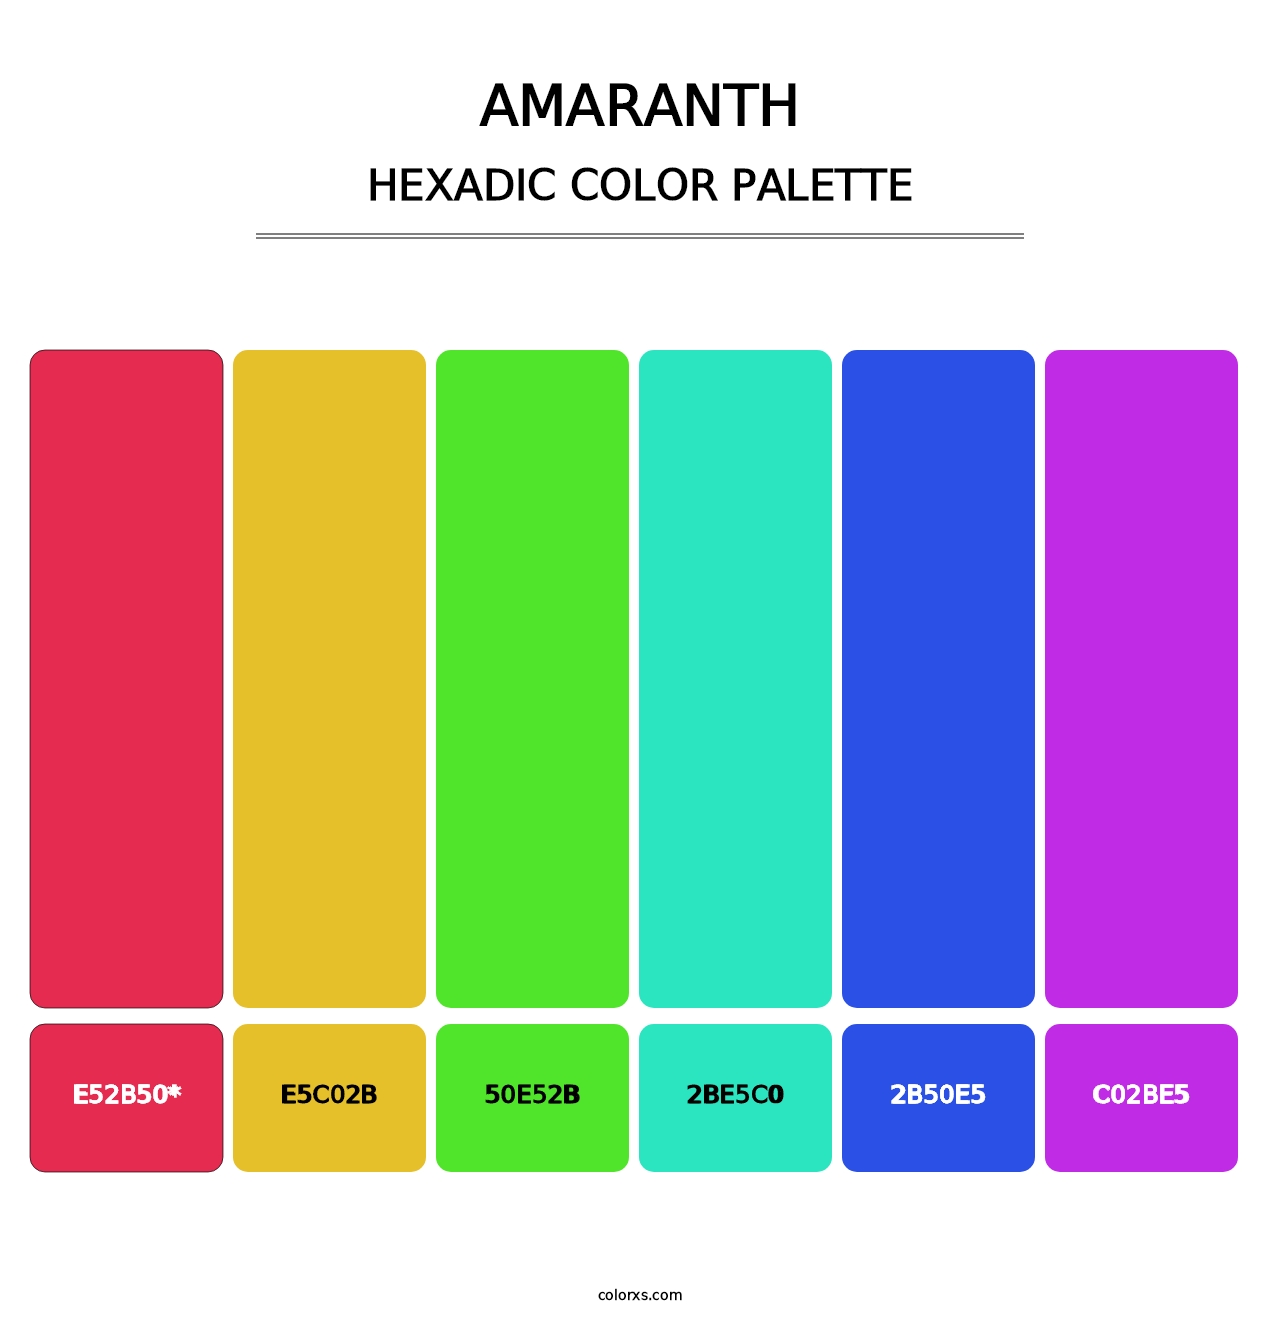 Amaranth - Hexadic Color Palette